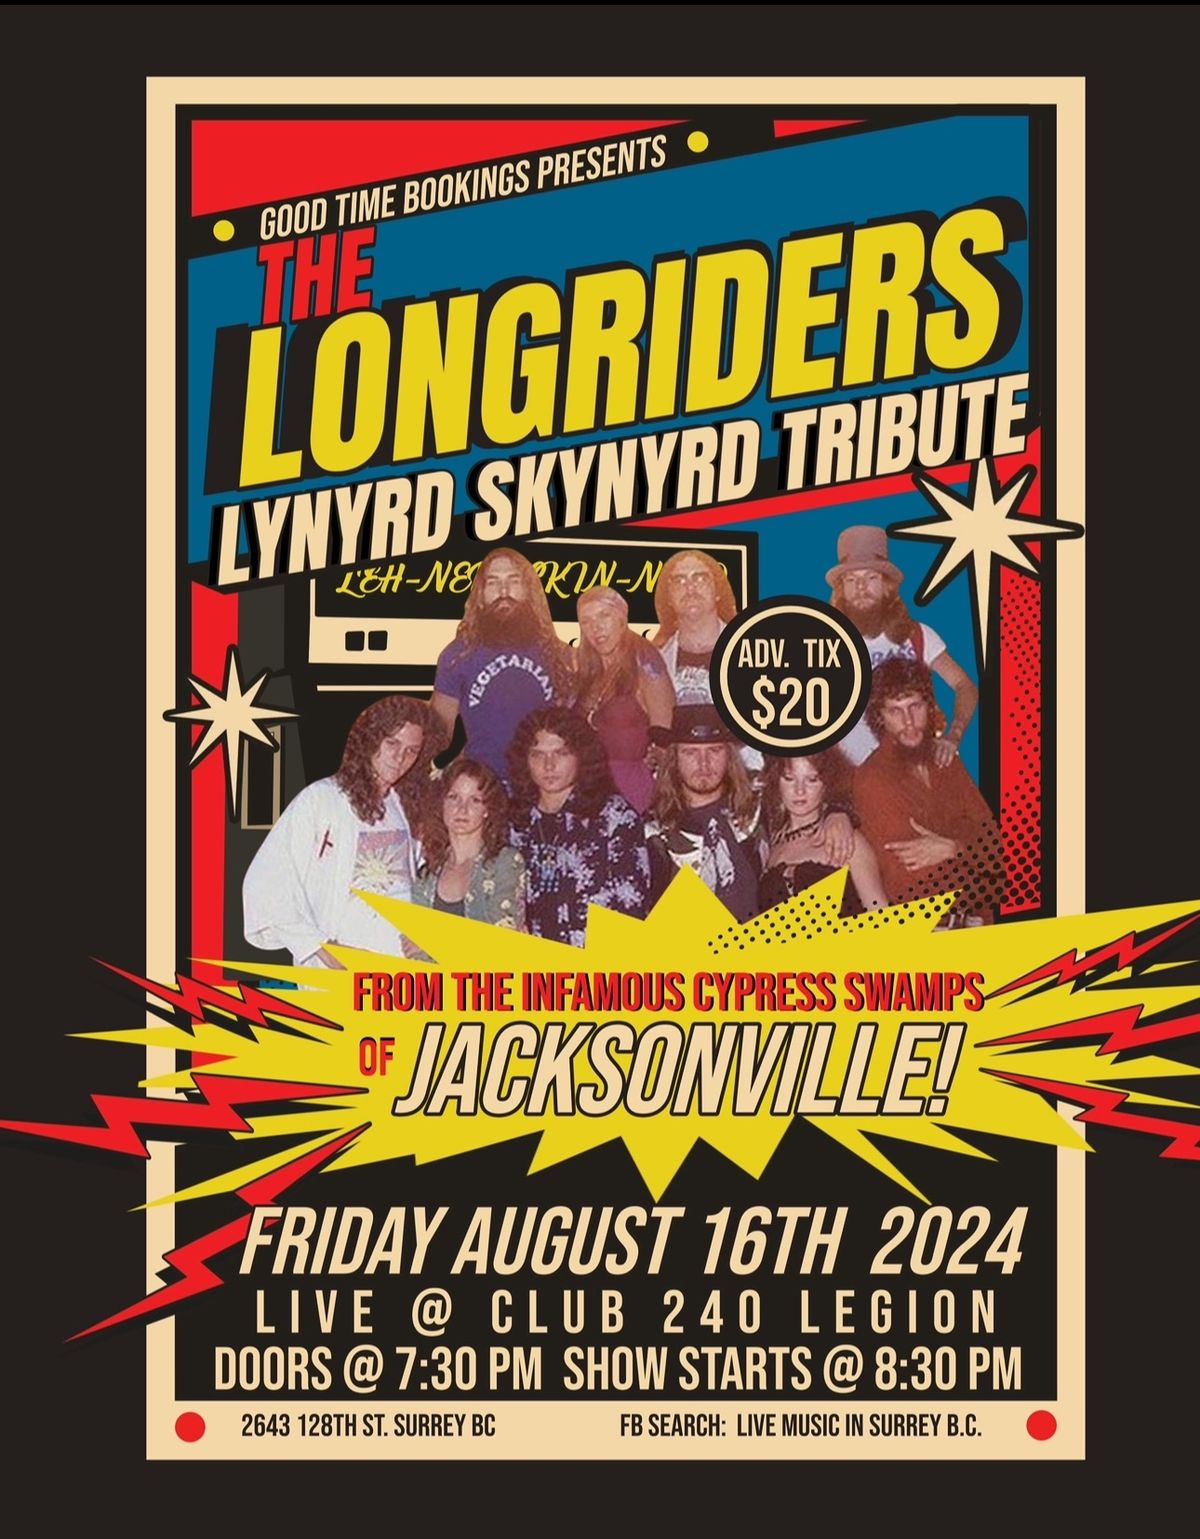 LONGRIDERS LYNYRD SKYNYRD TRIBUTE RETURNS LIVE! @ CLUB 240 WHITE ROCK!